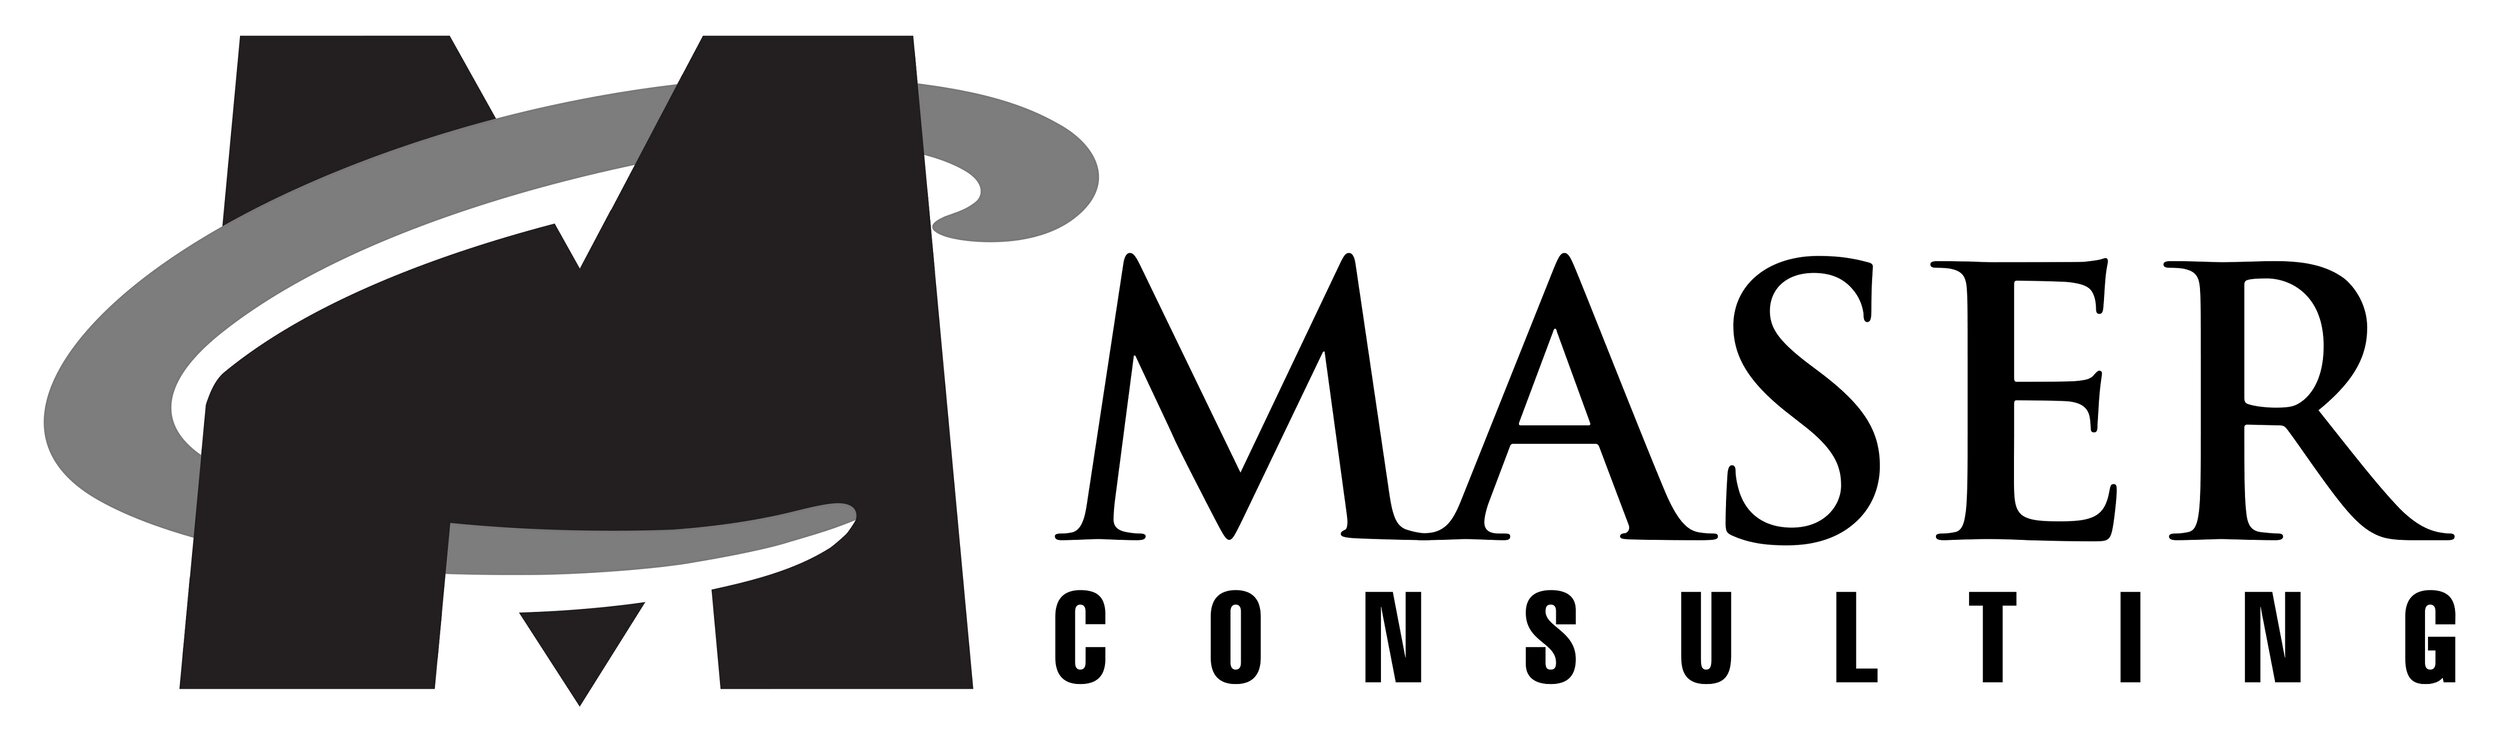 Maser Consulting_Horizontal Logo.jpg